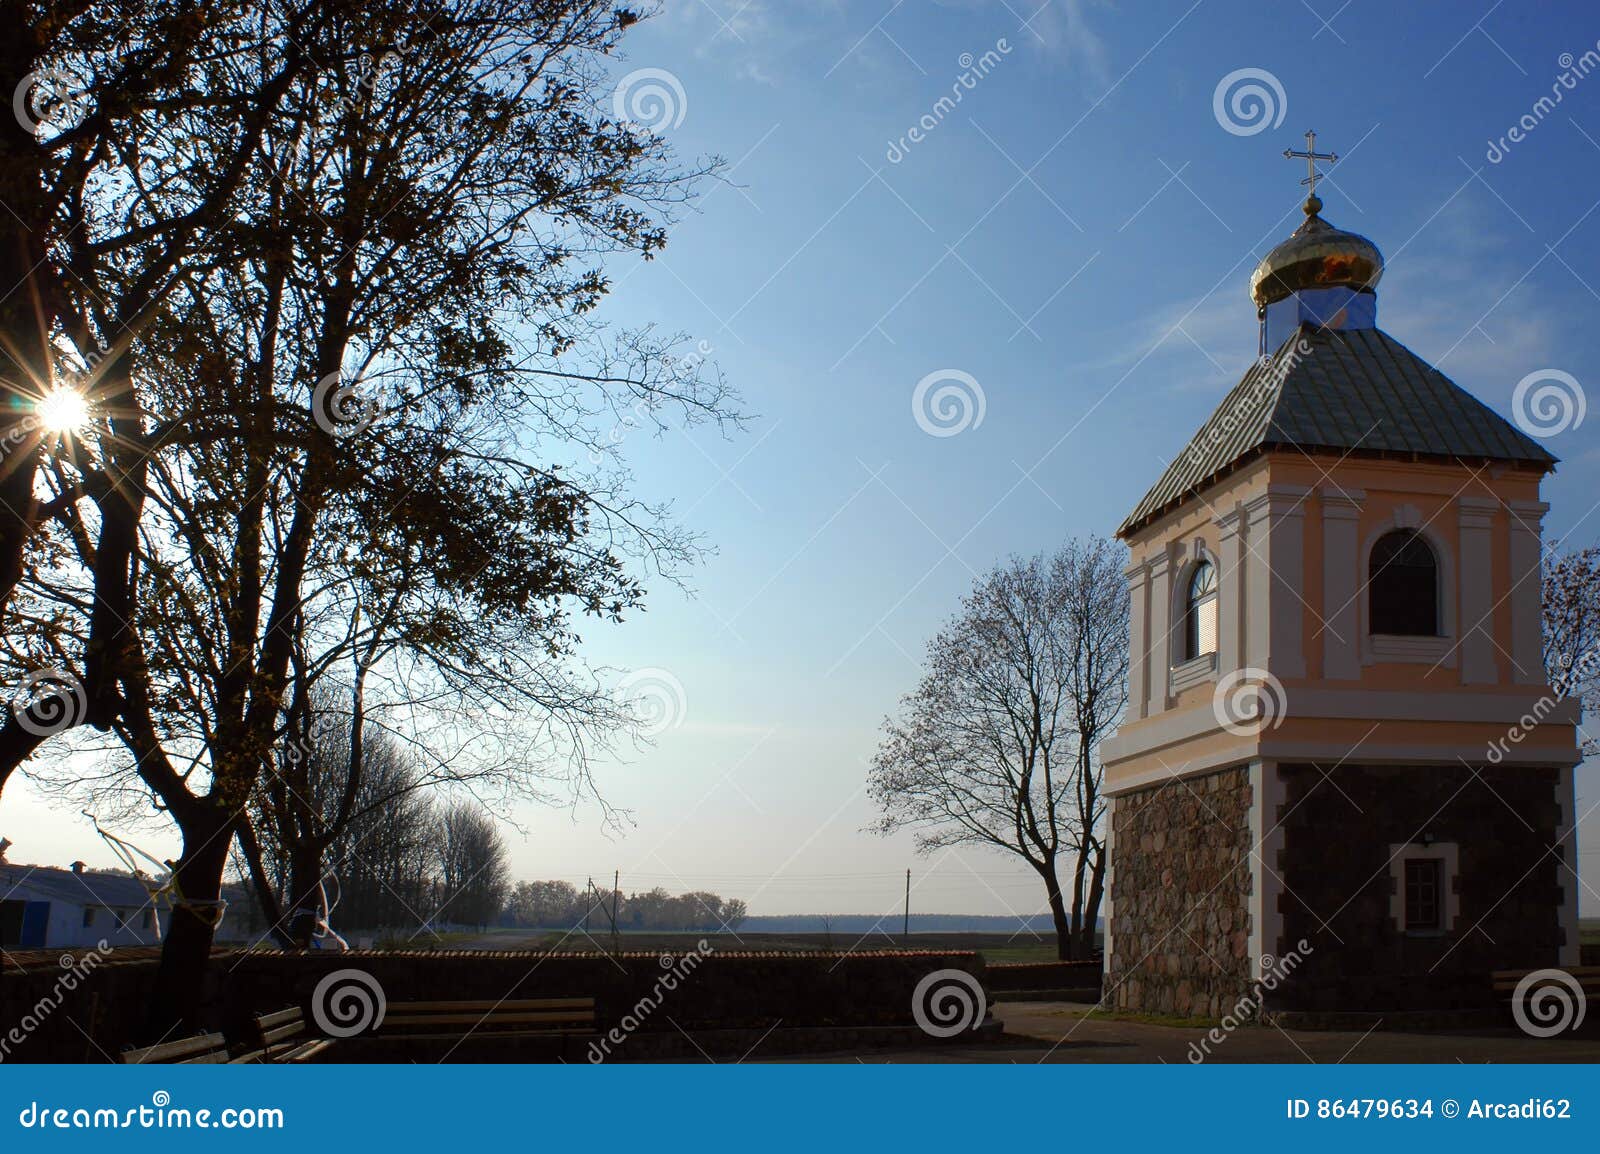 Weißrussland, Synkovichi, St- Michael` s Kirche